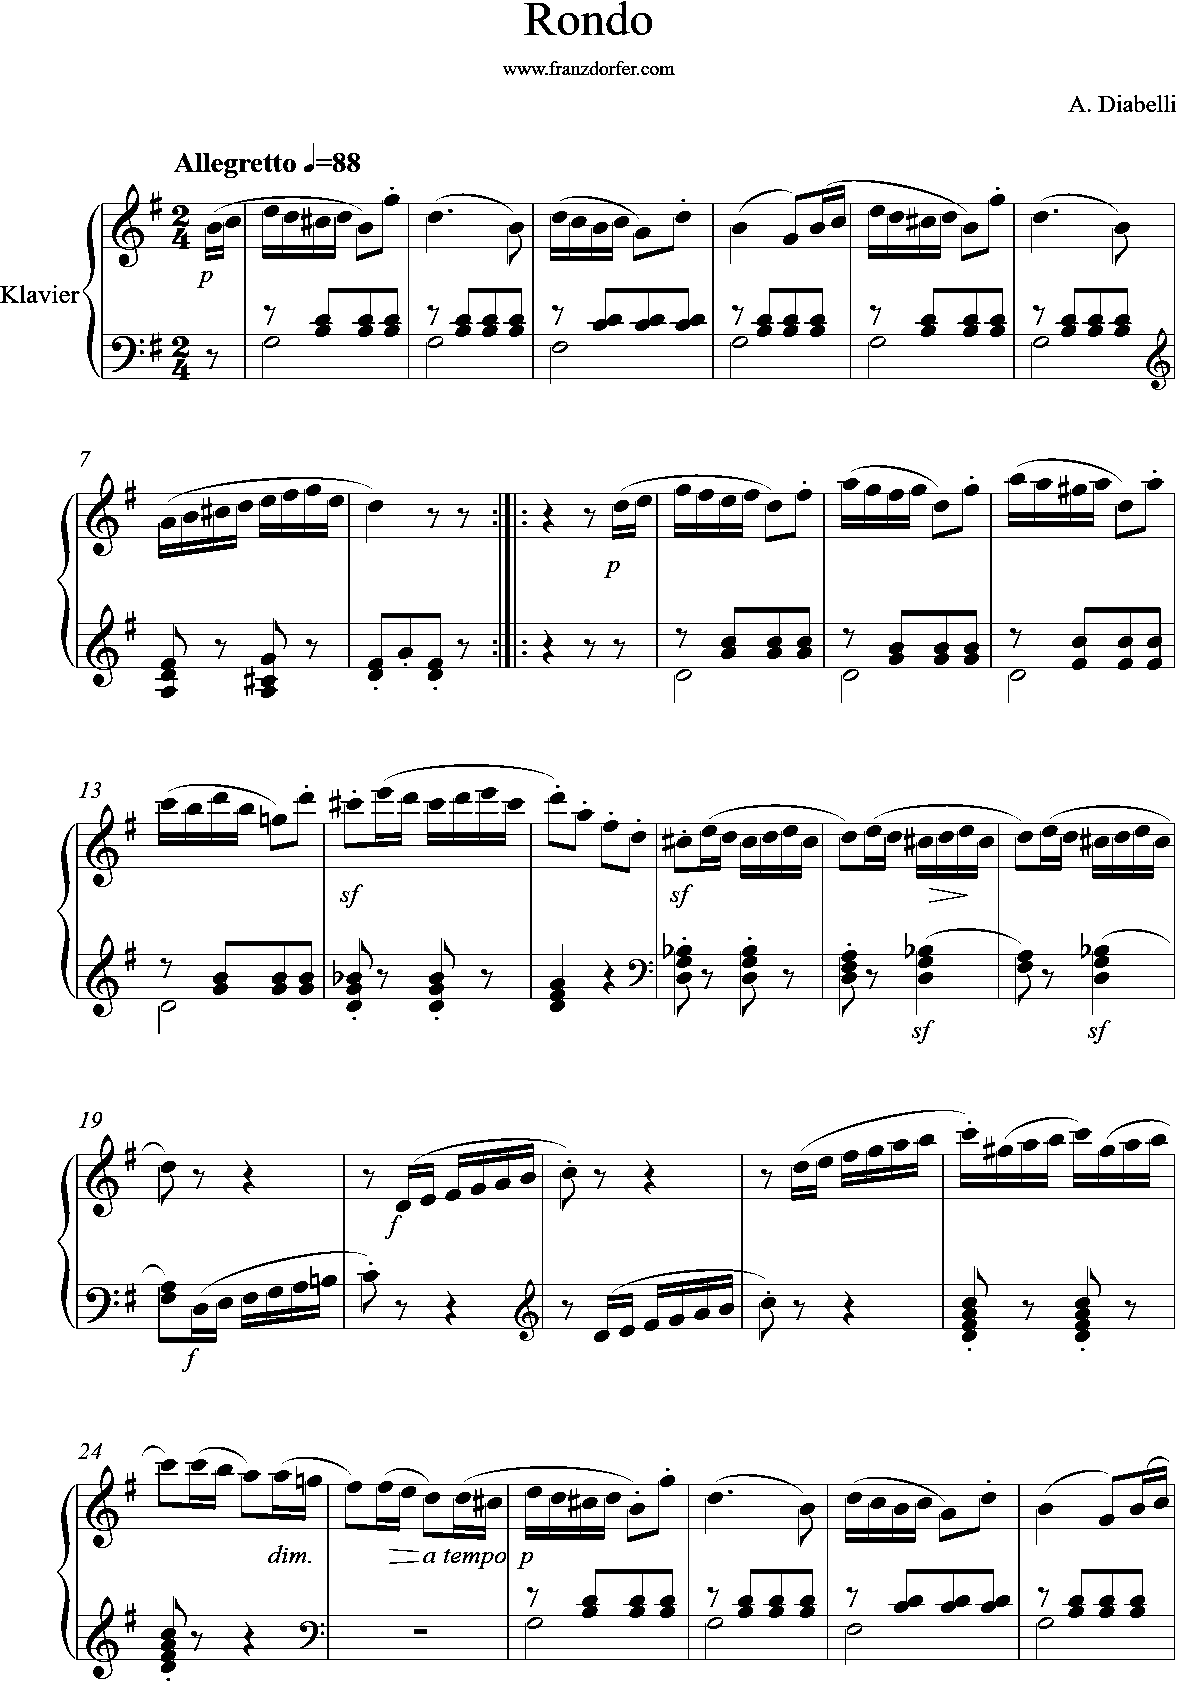 klaviernoten, Rondo in G-Diabelli, page001